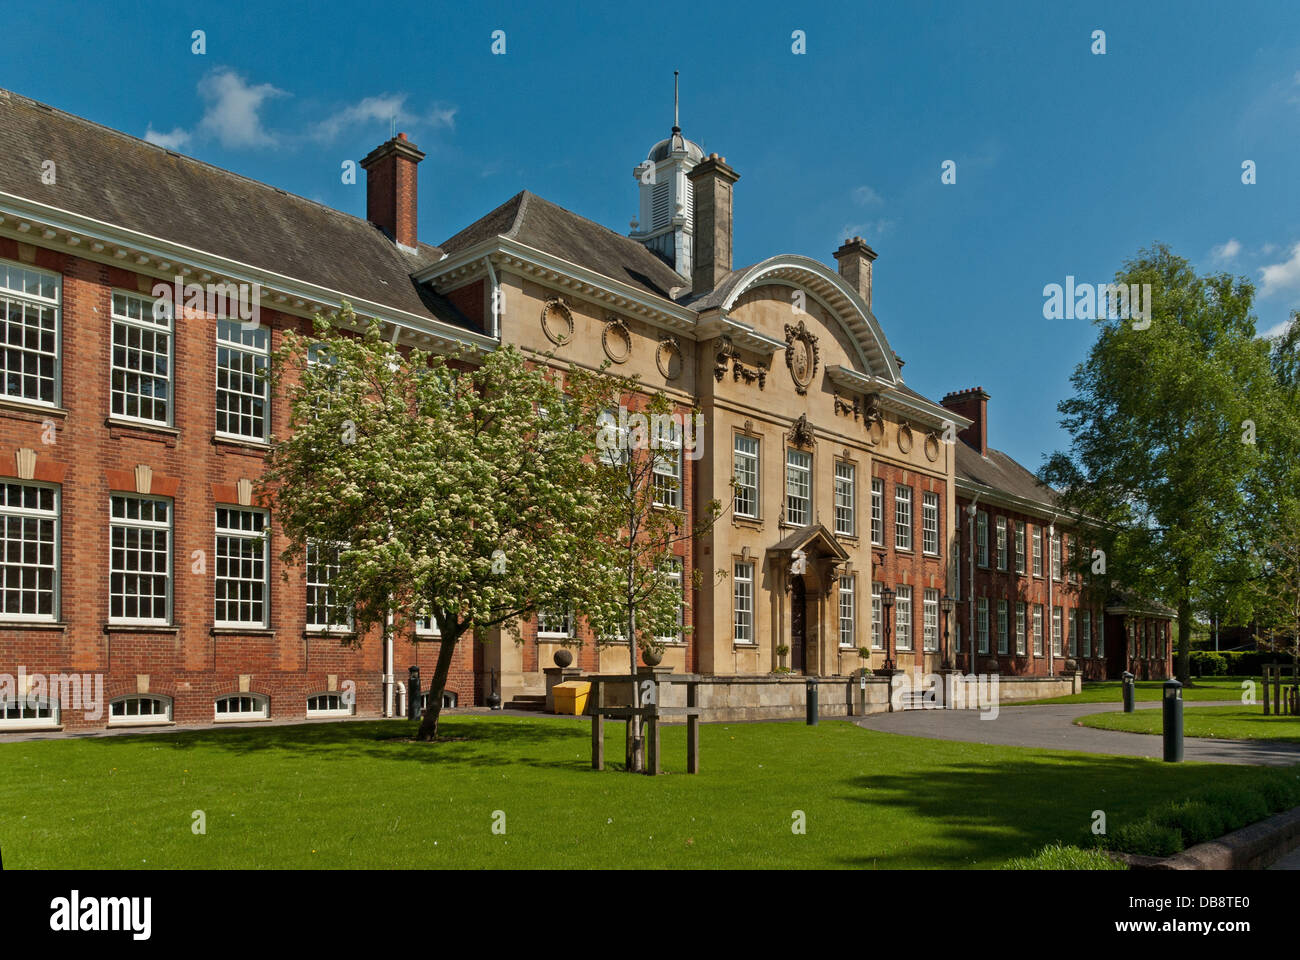 Frontage of the University of Northampton, UK Stock Photo